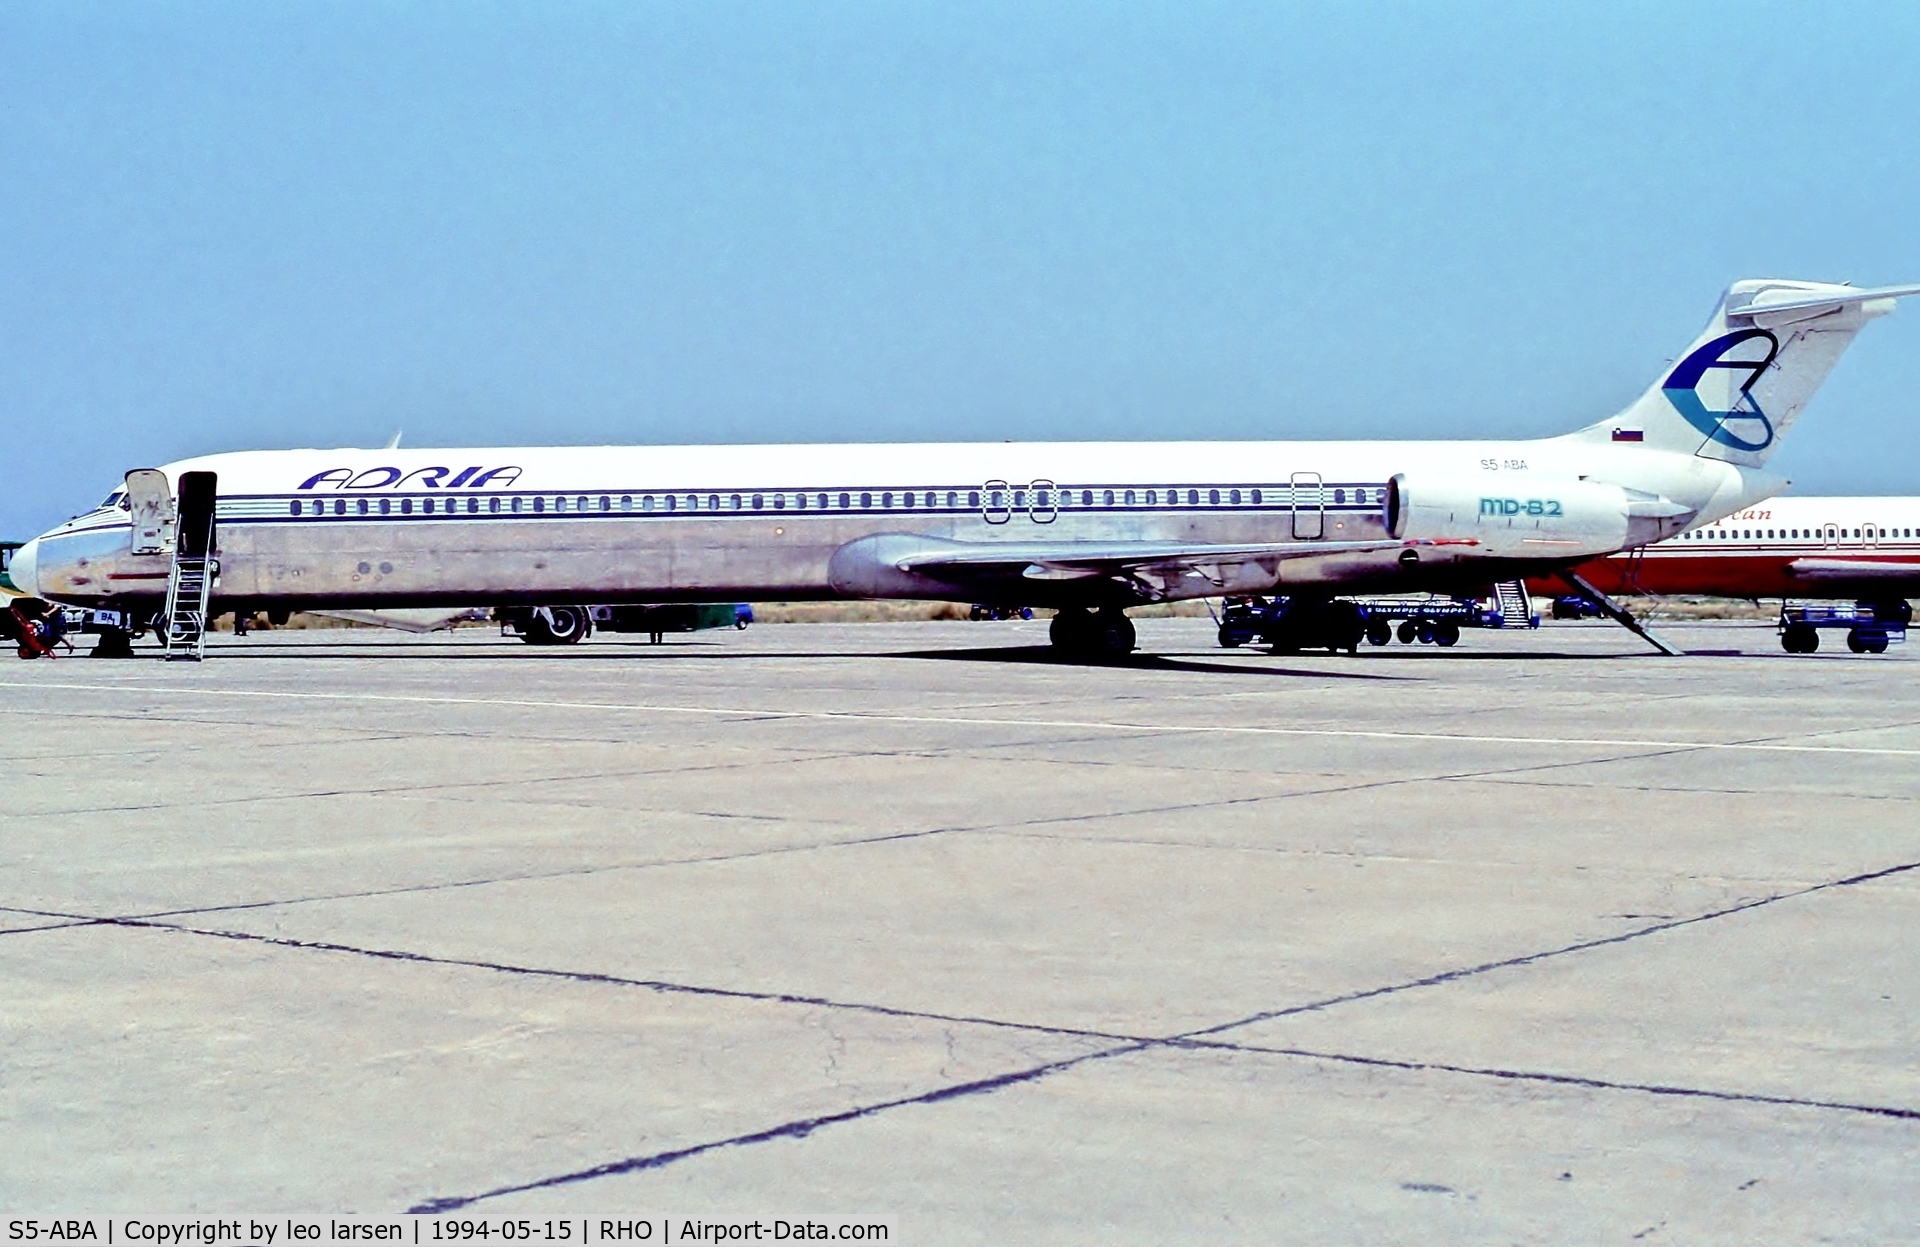 S5-ABA, 1981 McDonnell Douglas MD-82 (DC-9-82) C/N 48048, Rhodos 15.5.94